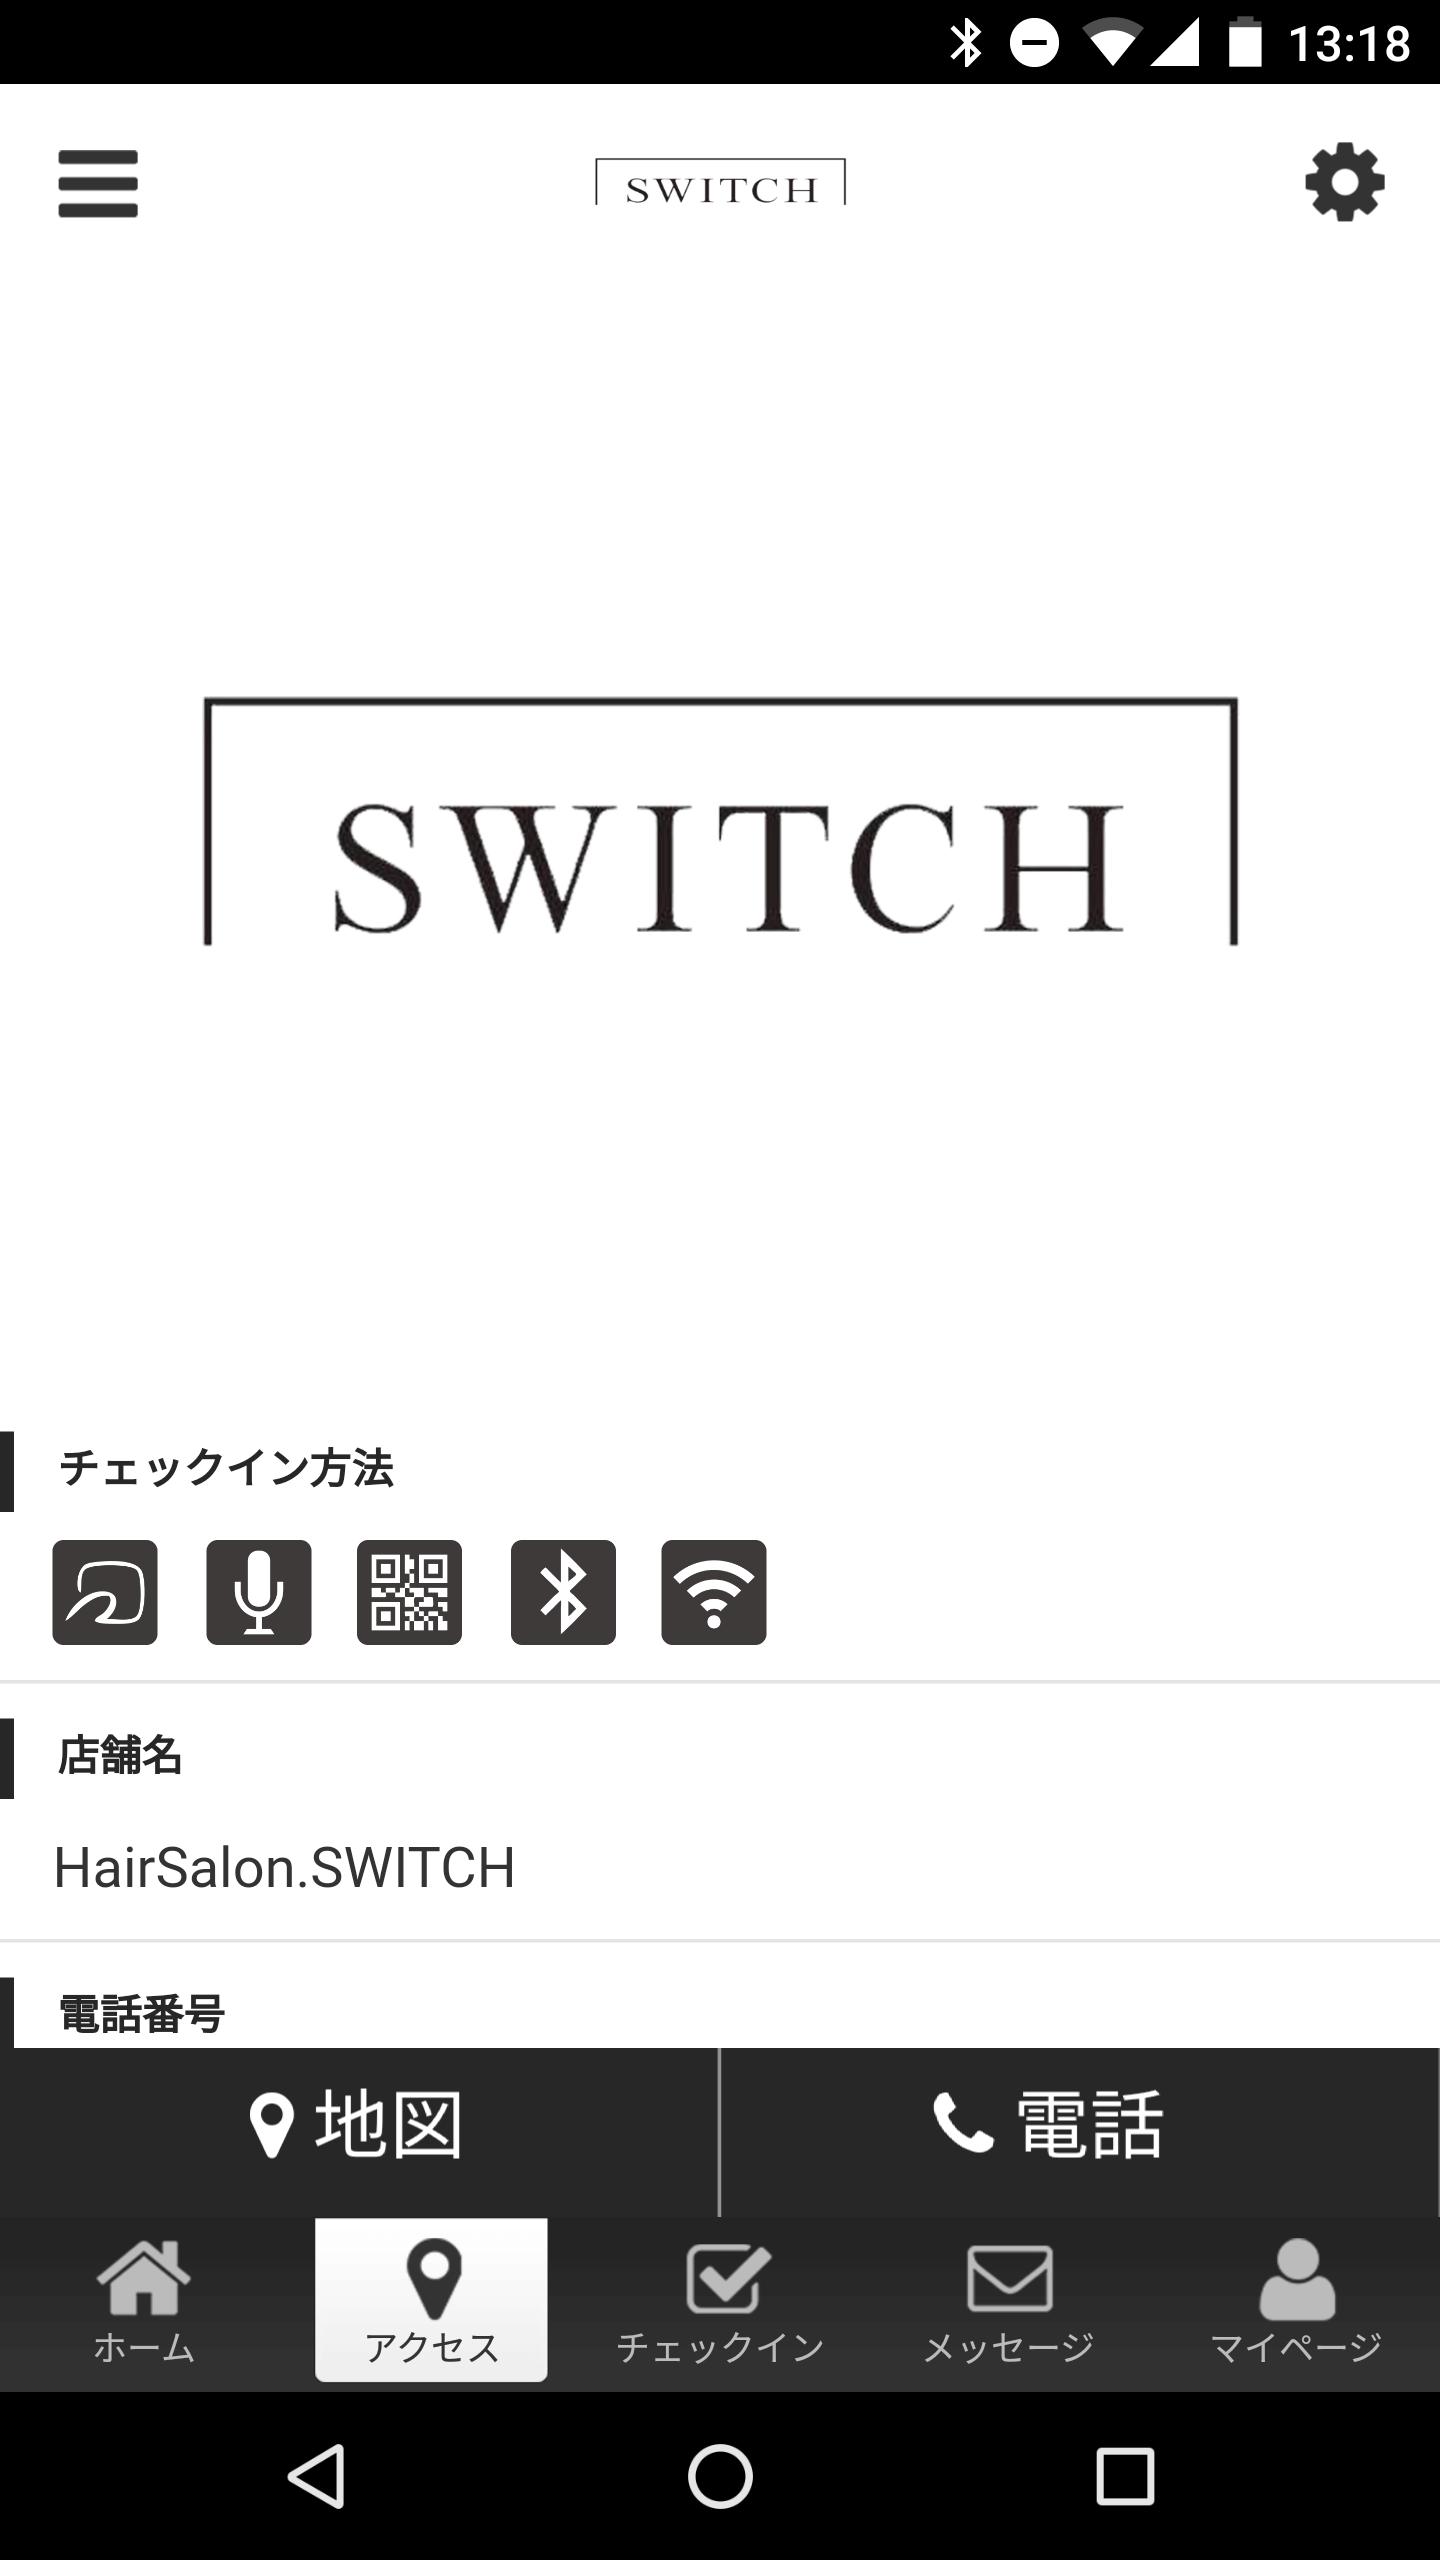 HairSalon.SWITCH　公式アプリ 2.12.0 Screenshot 4